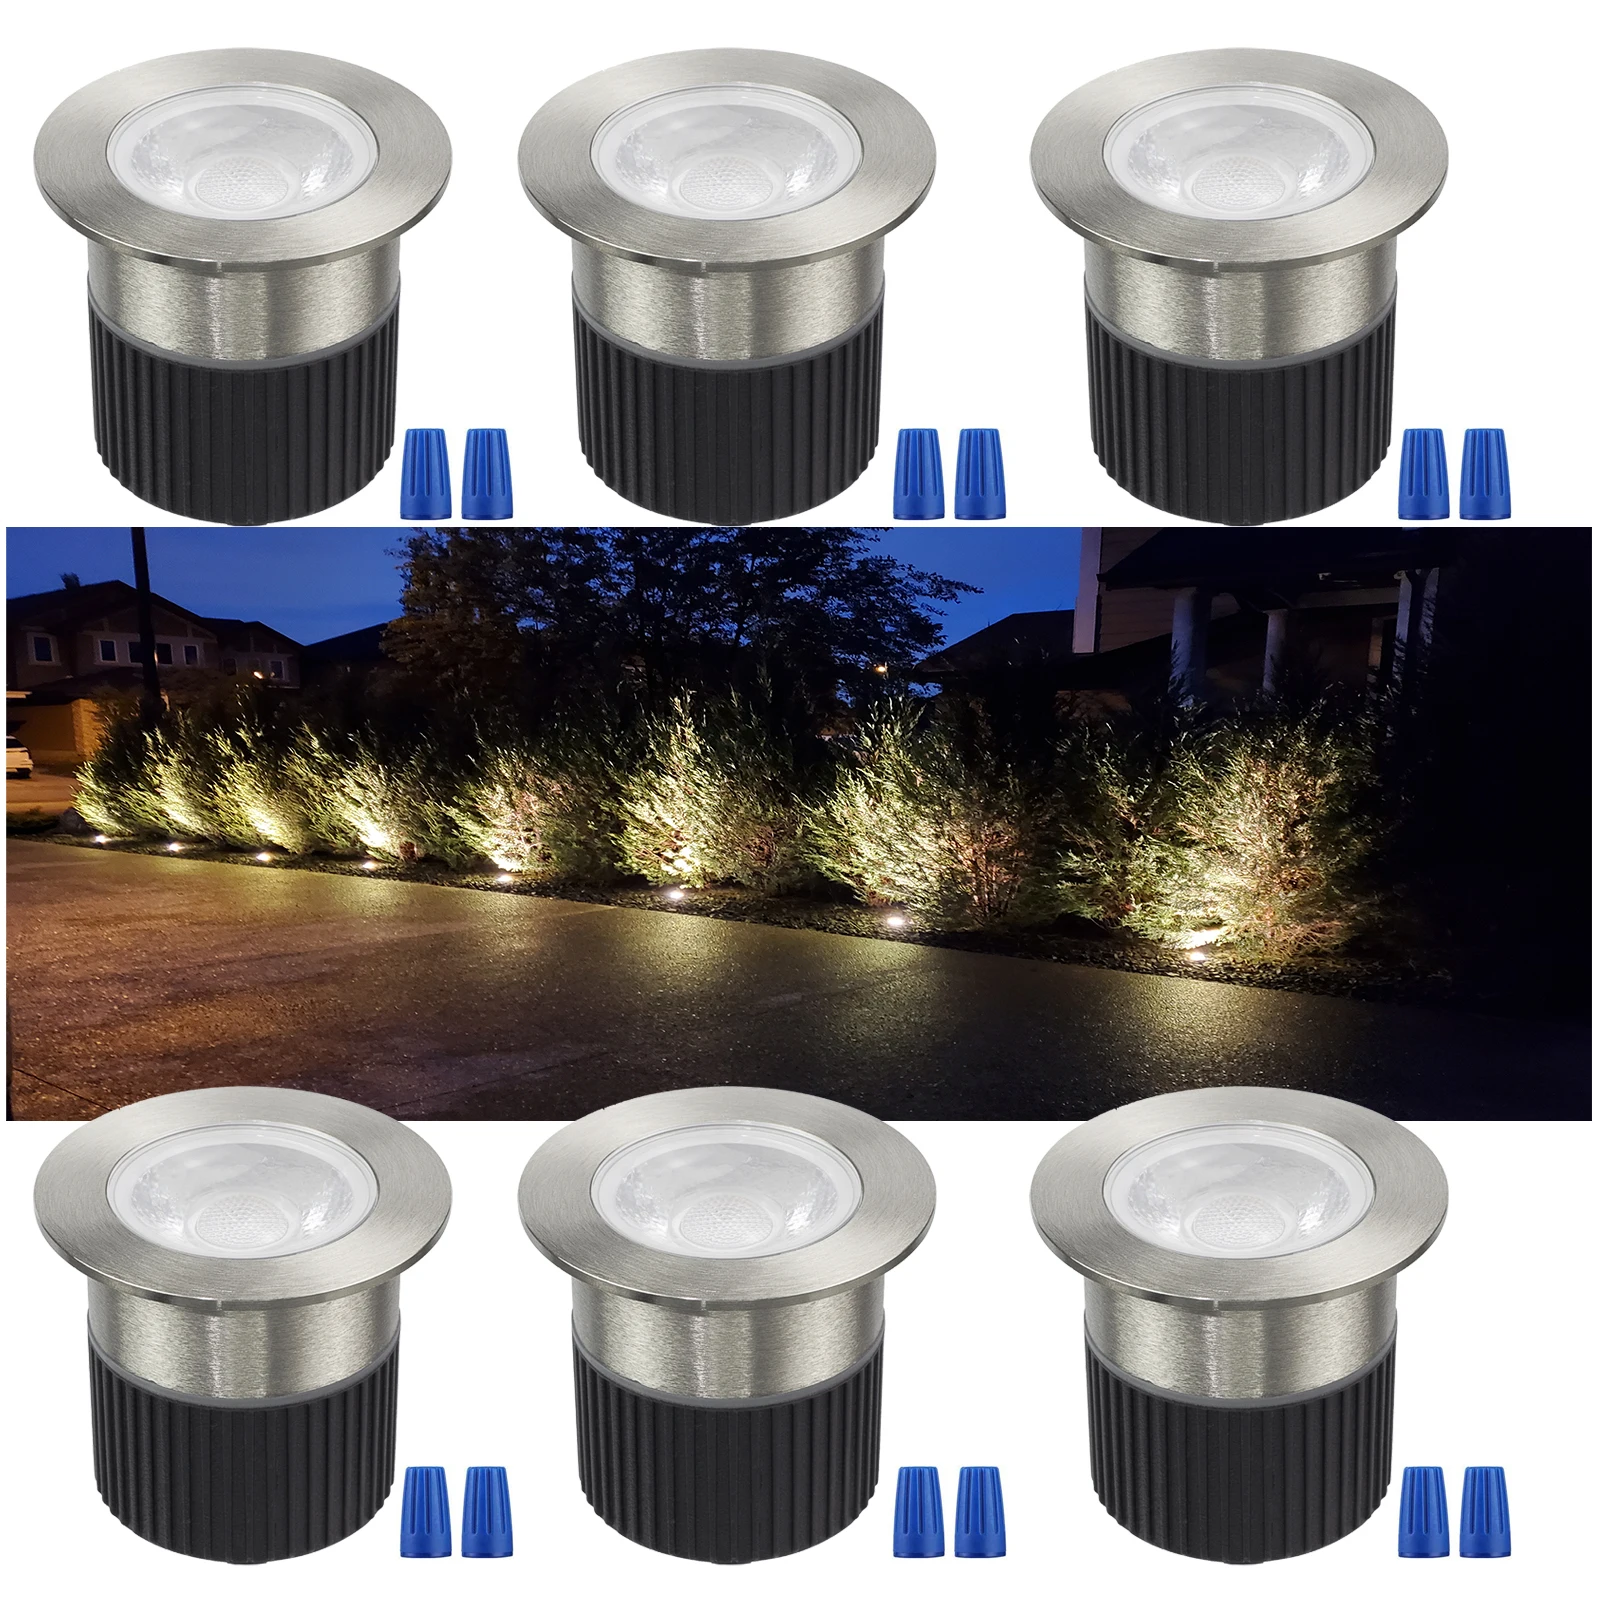 

6-Pack Outdoor In-ground LED Garden Lights,Driverway Backyard Recessed Lighting,AC85-265V 5W 250Lumen Under Tree Landscape Lamp